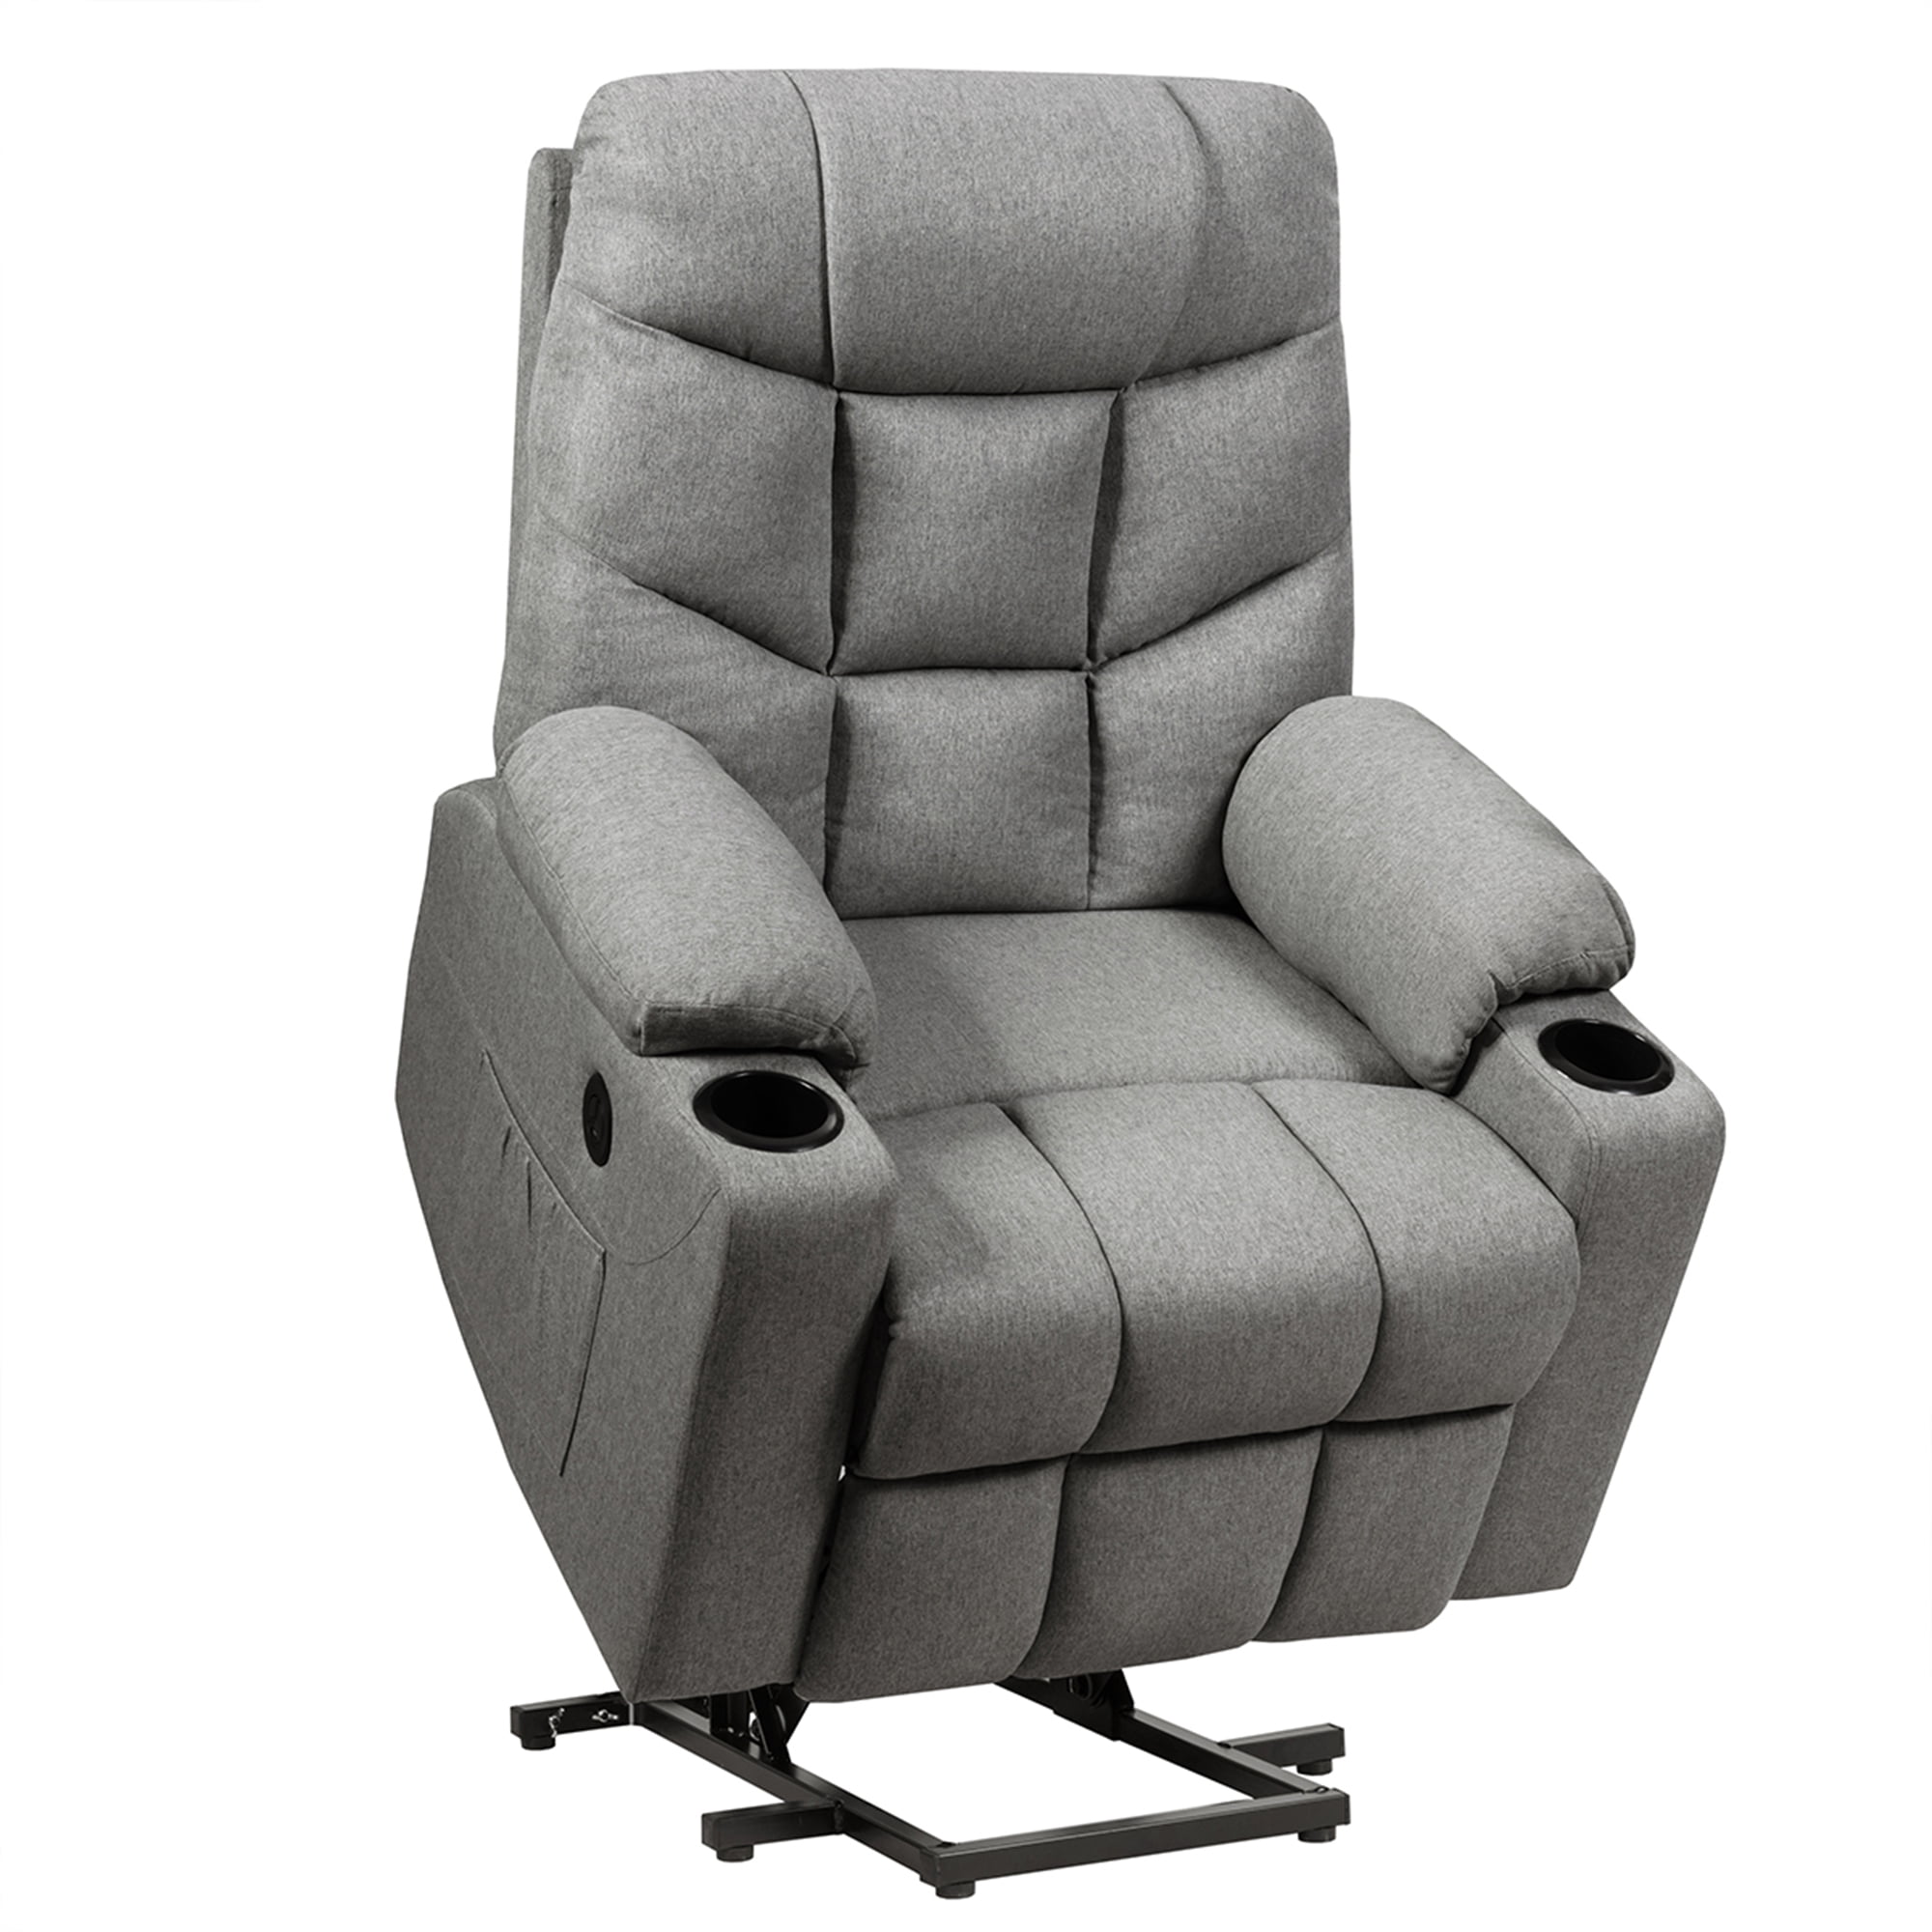 Gymax Power Lift Massage Recliner Fabric Sofa Chair W Remote Control Light Gray Walmart Com Walmart Com